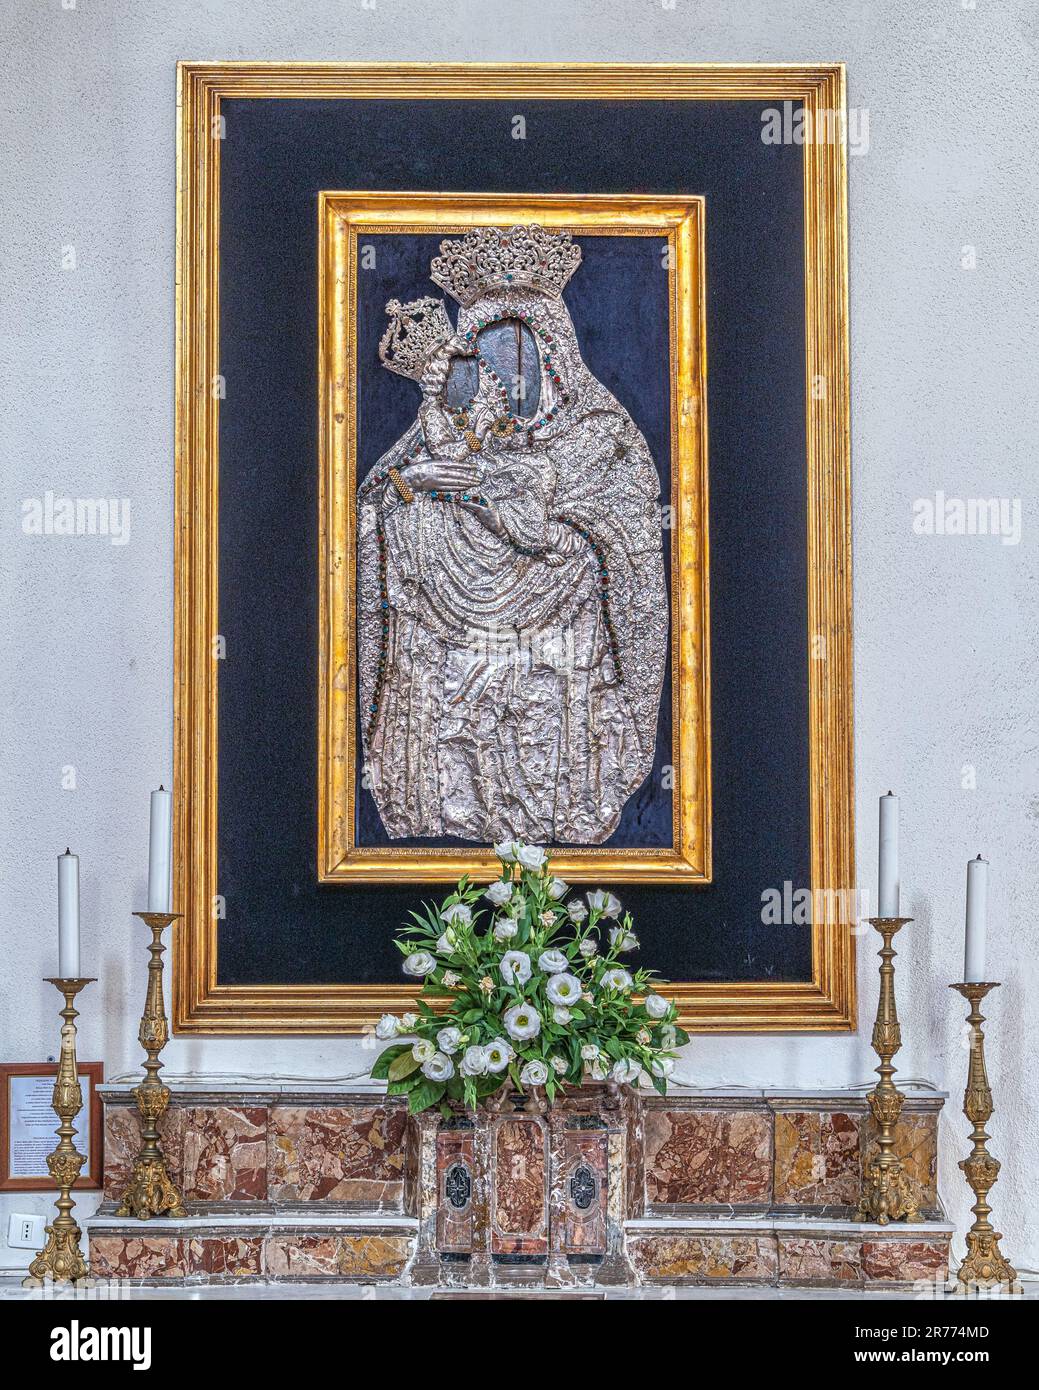 L'icona bizantina, ricoperta da un foglio d'argento goffrato, si presenta come acheiropoieta, cioè non dipinta da mani umane. Taormina, Messina Foto Stock